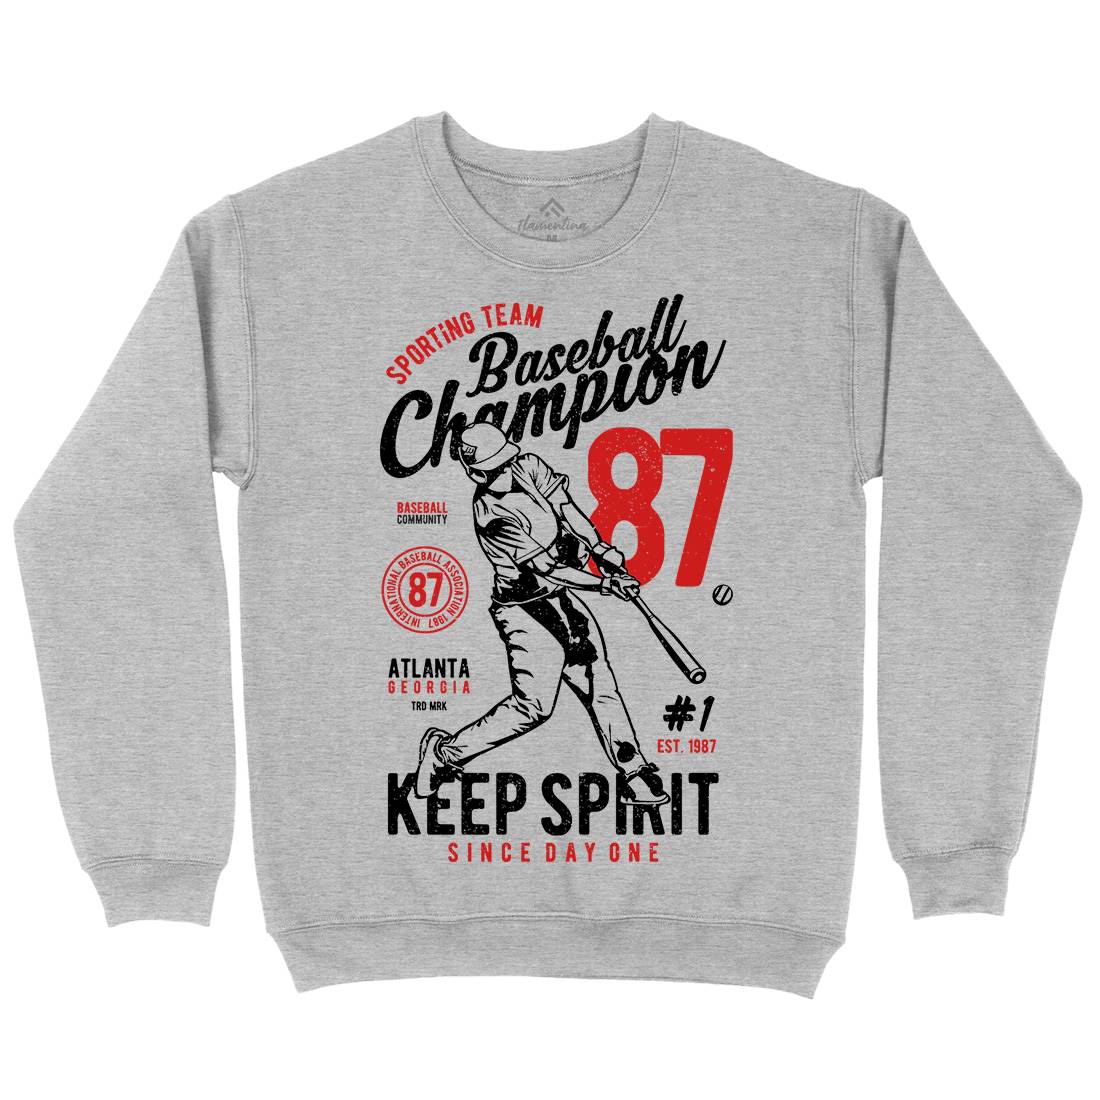 Baseball Champion Kids Crew Neck Sweatshirt Sport A616